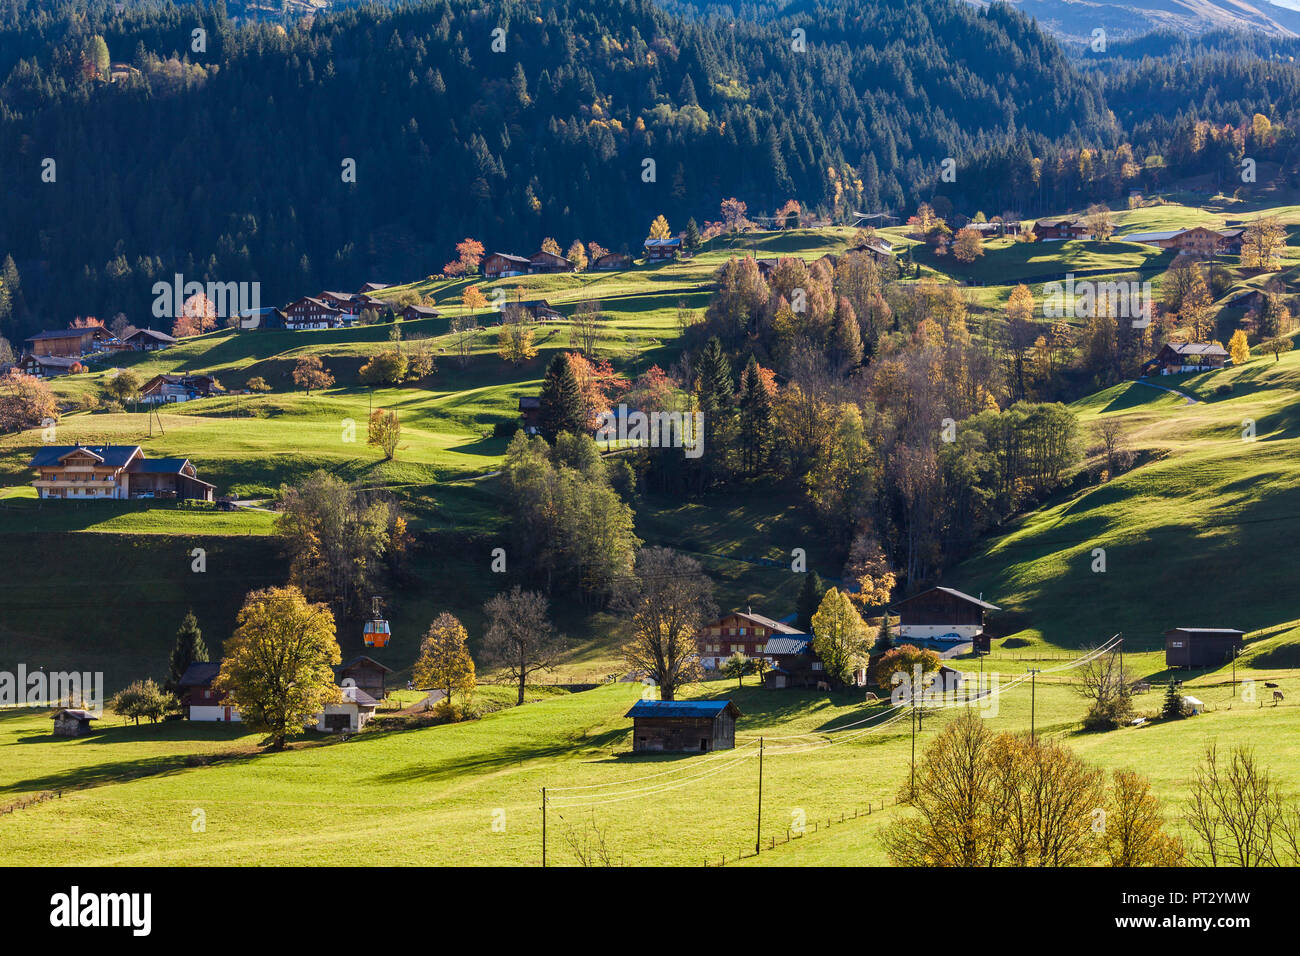 La Svizzera, Canton Berna Oberland Bernese, Grindelwald, chalet, funivia, ferrovia di montagna Foto Stock